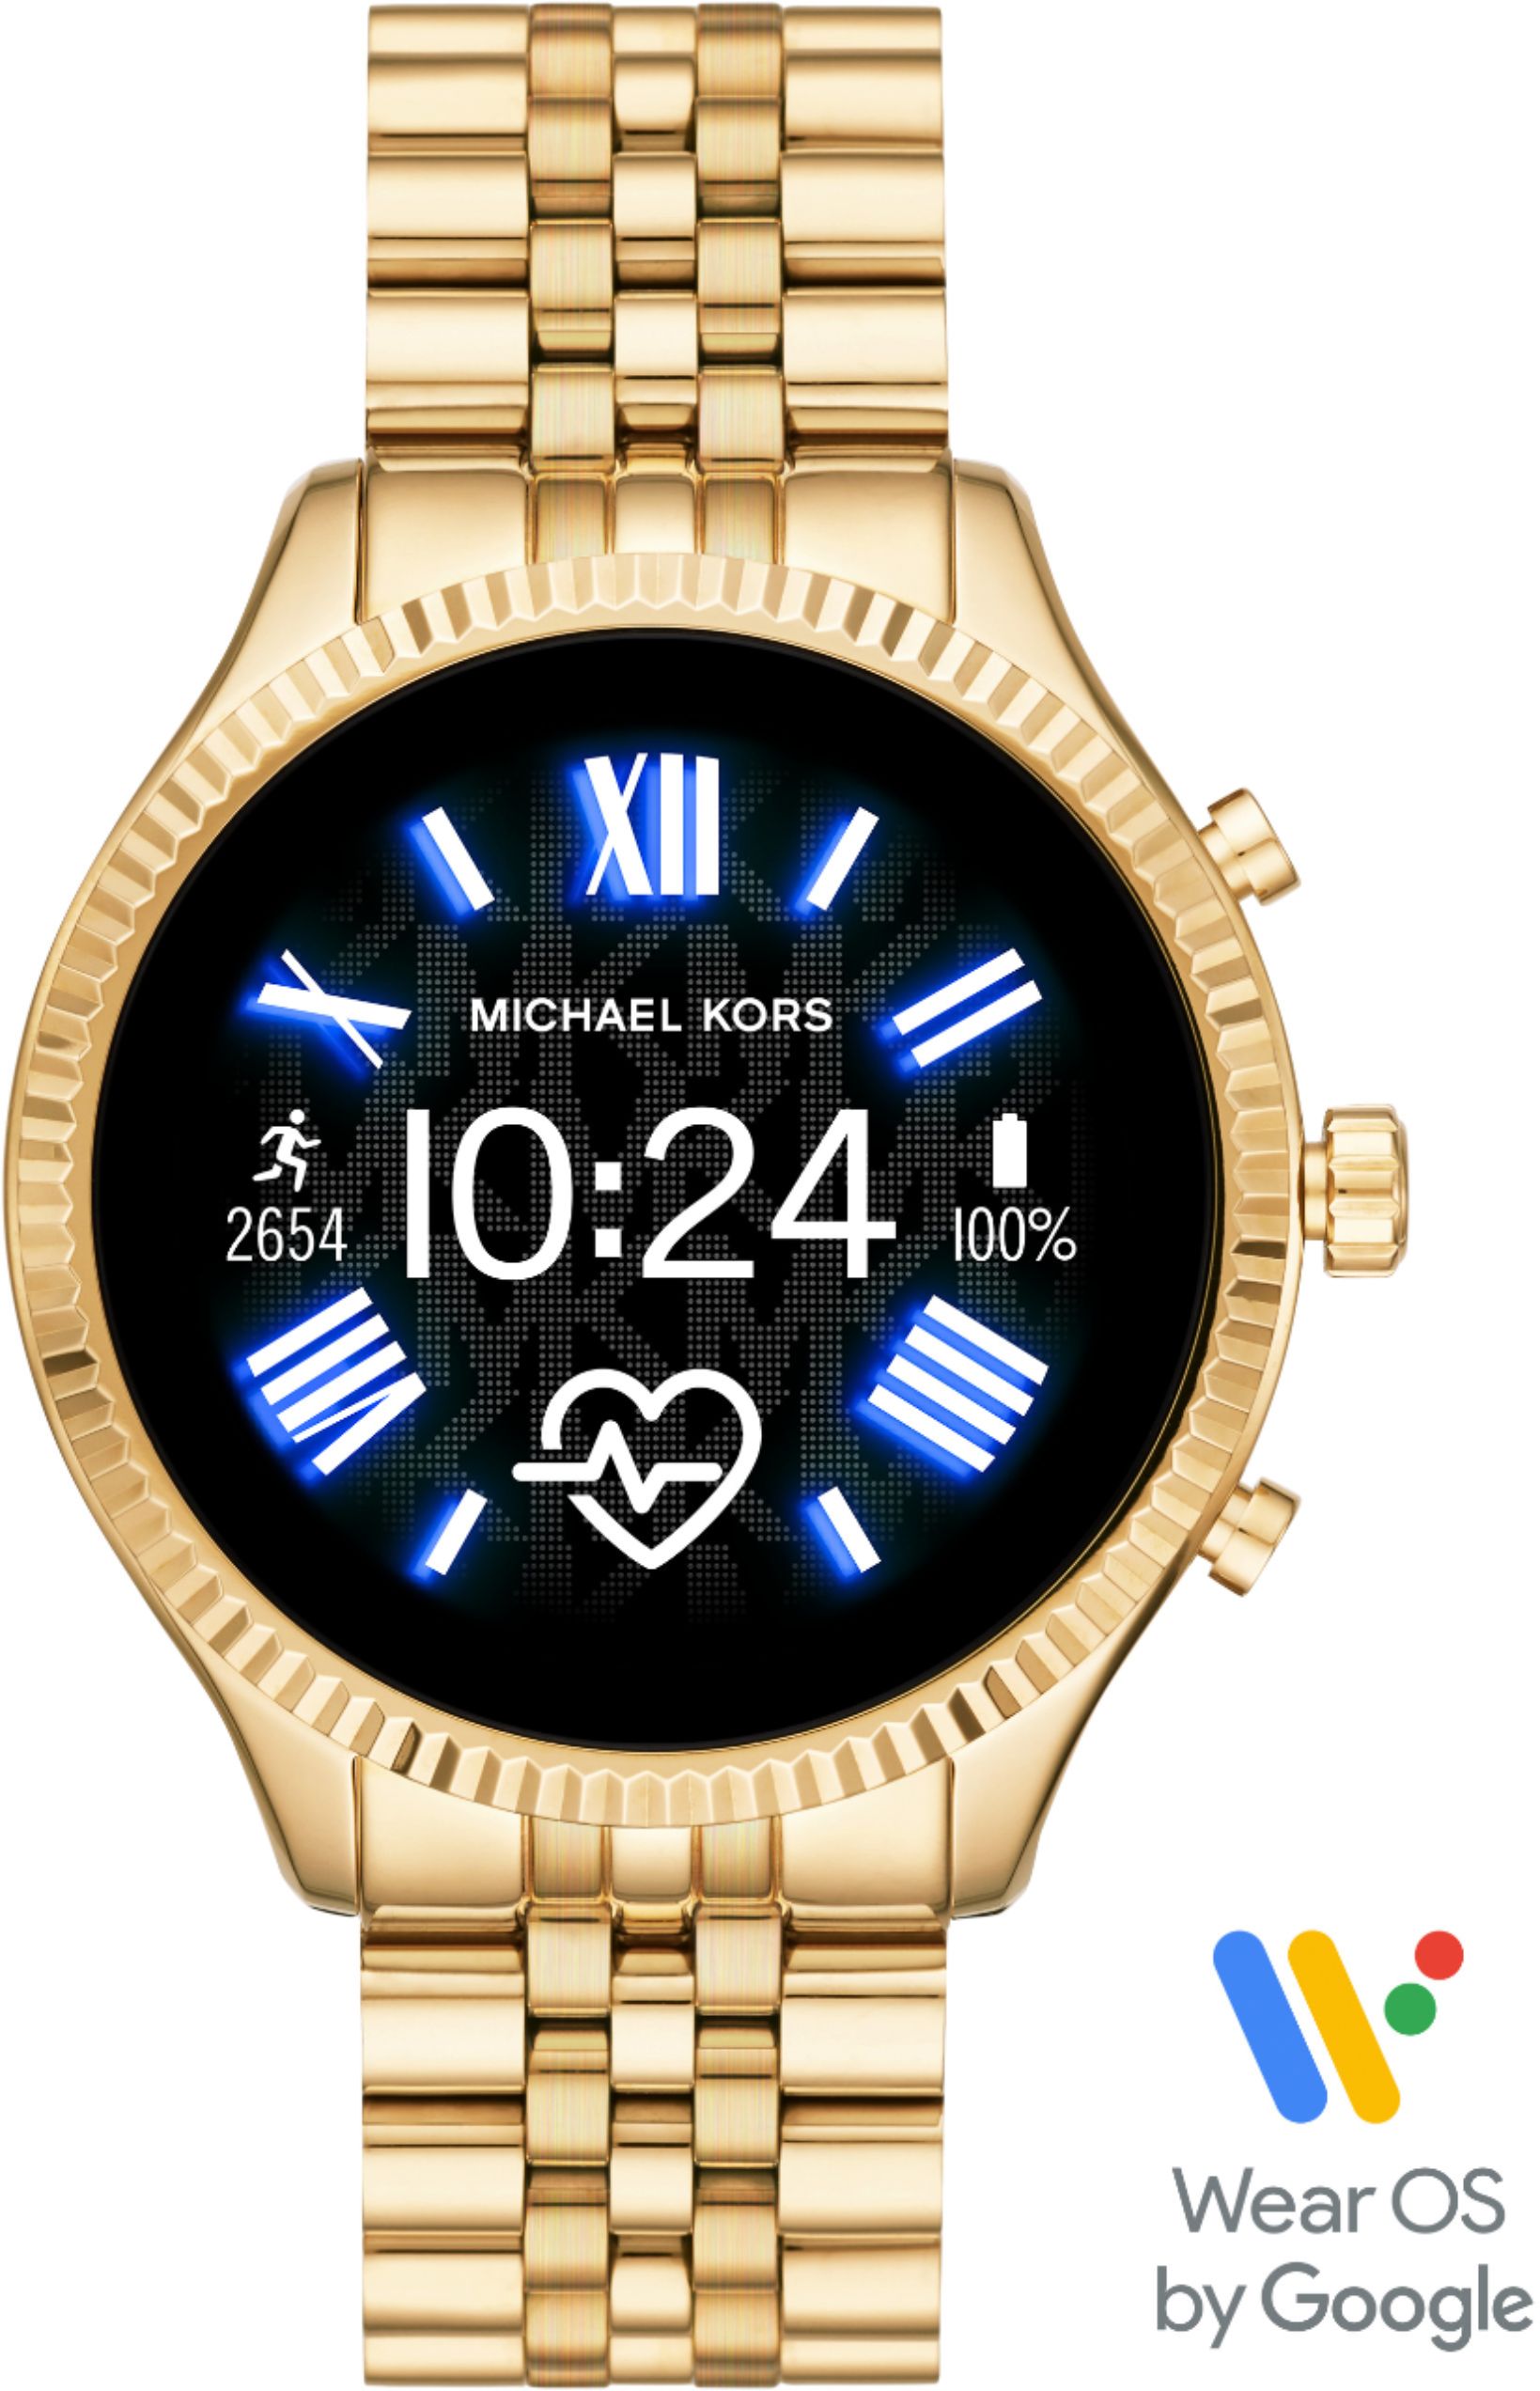 samsung smartwatch michael kors